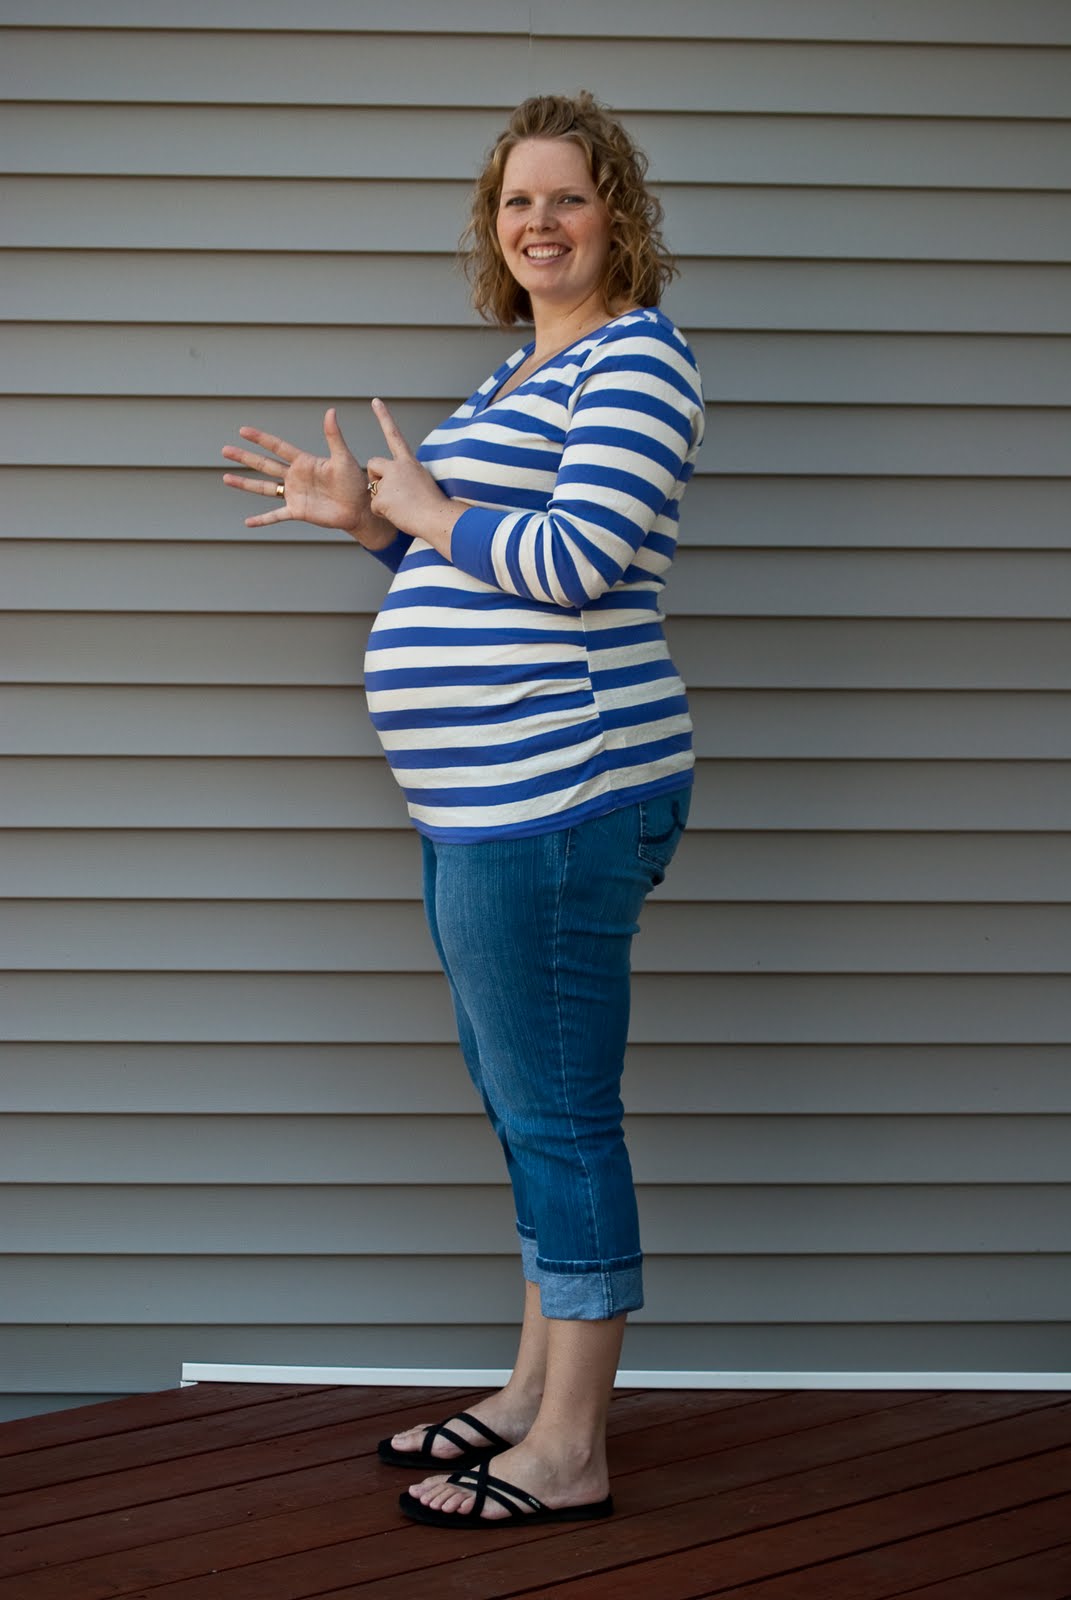 http://3.bp.blogspot.com/_fCbByUVt-Jw/THw1e5w9CXI/AAAAAAAABM4/ObeouKLoAfM/s1600/24+weeks+pregnant.jpg